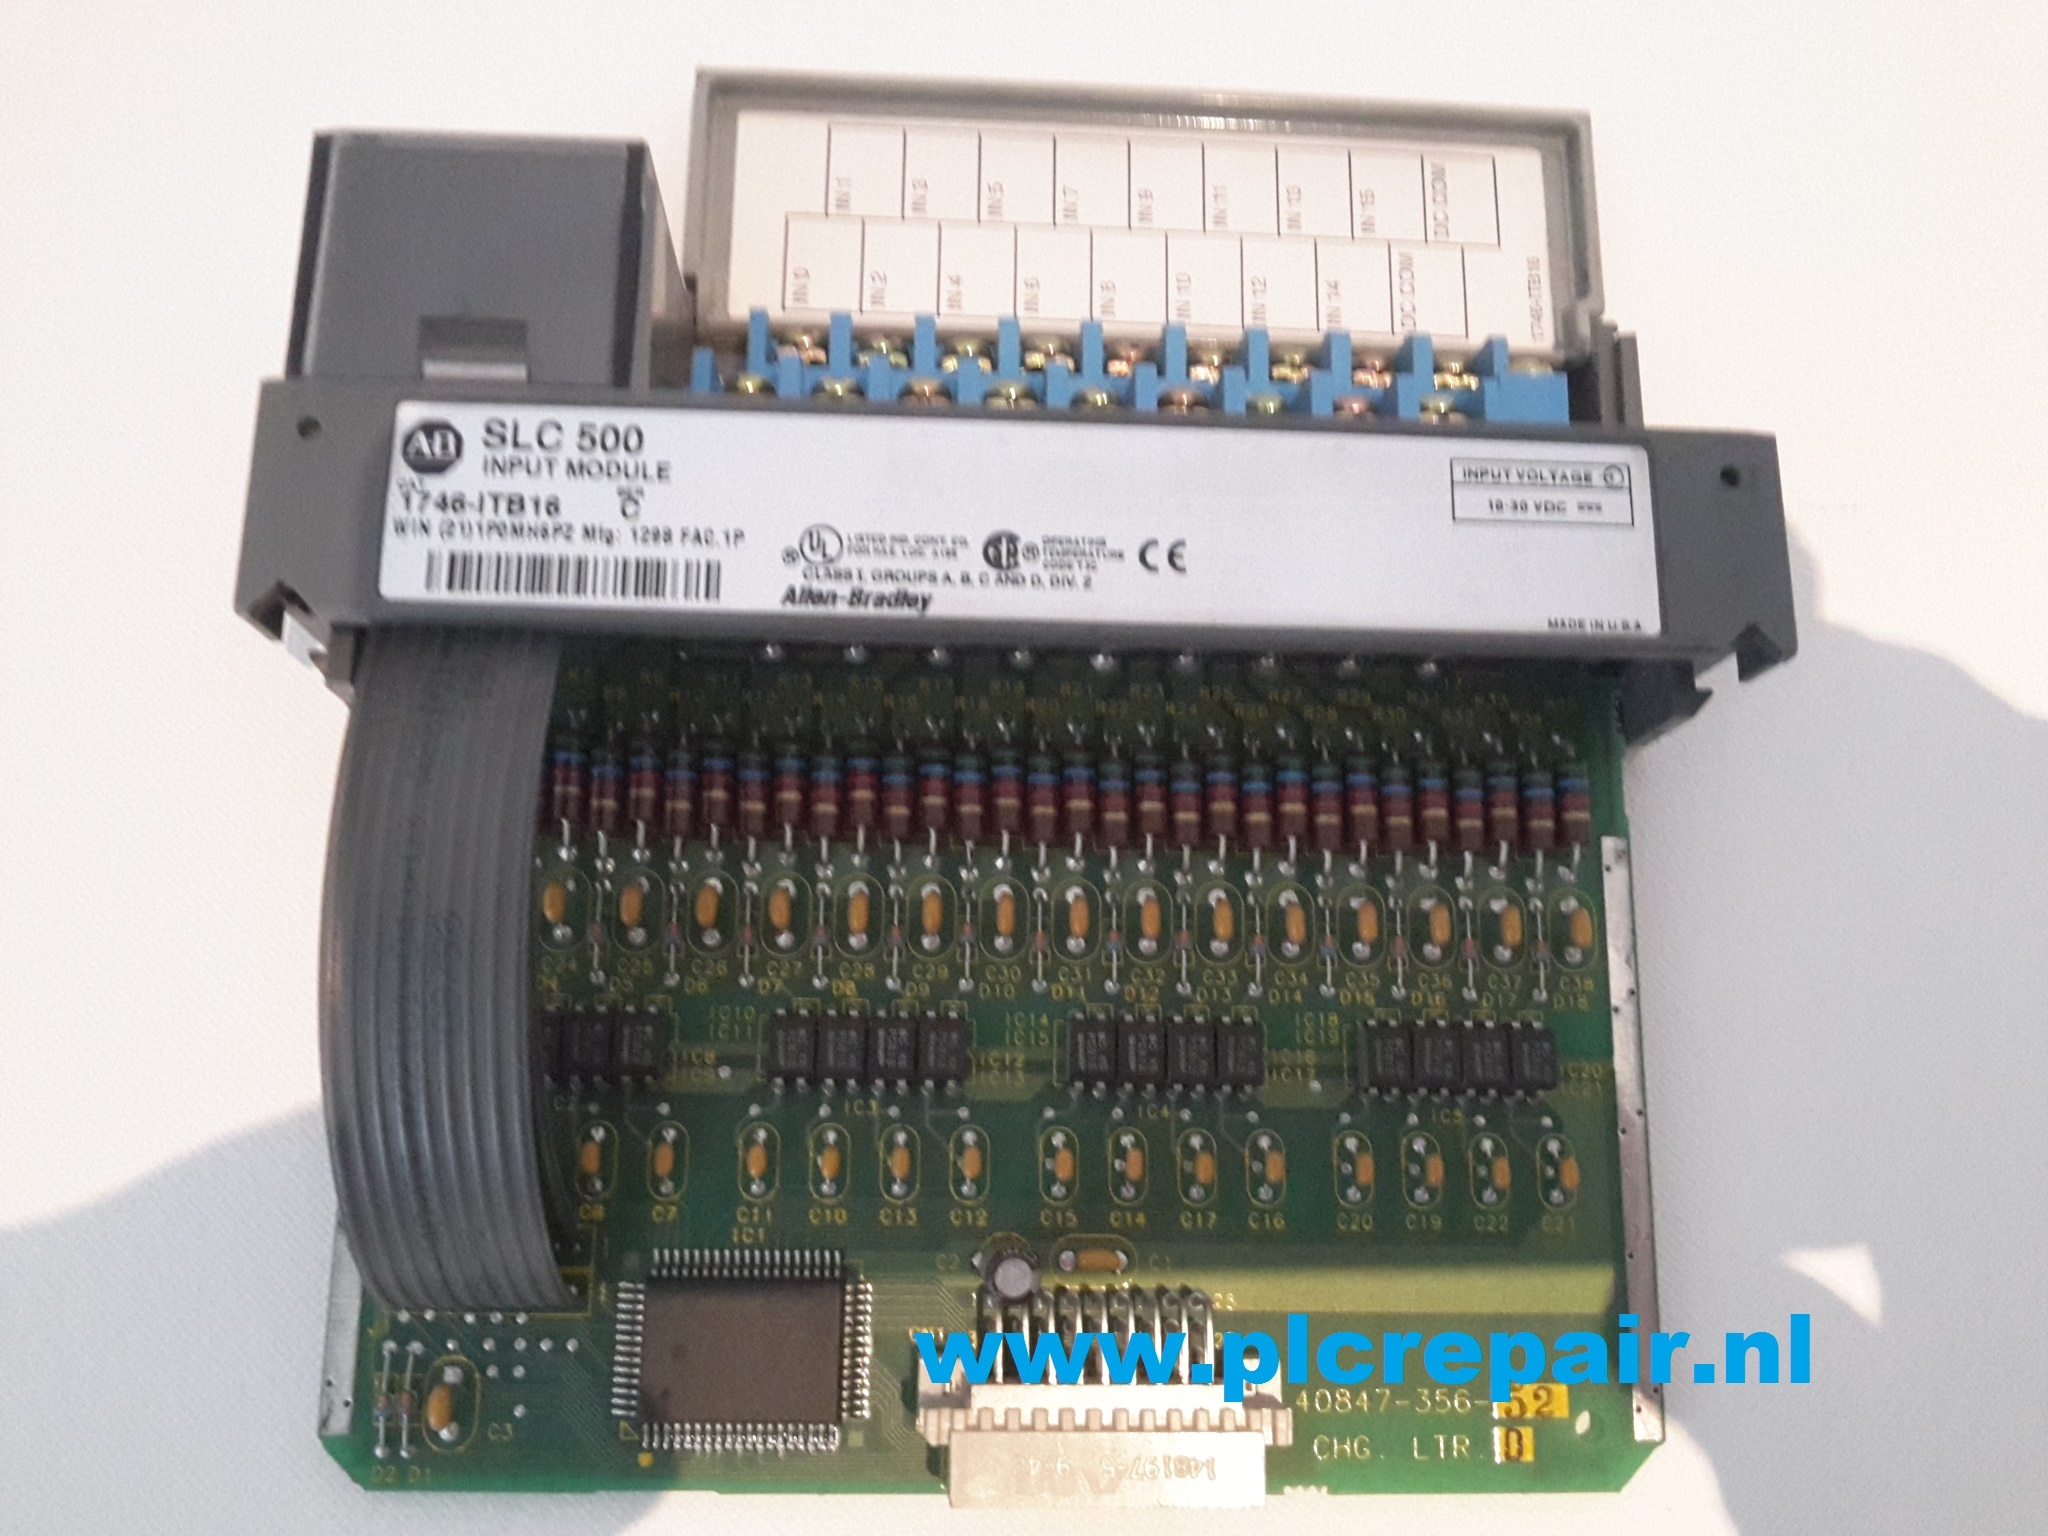 1746-ITB16 SLC500 input module DC sink fast.